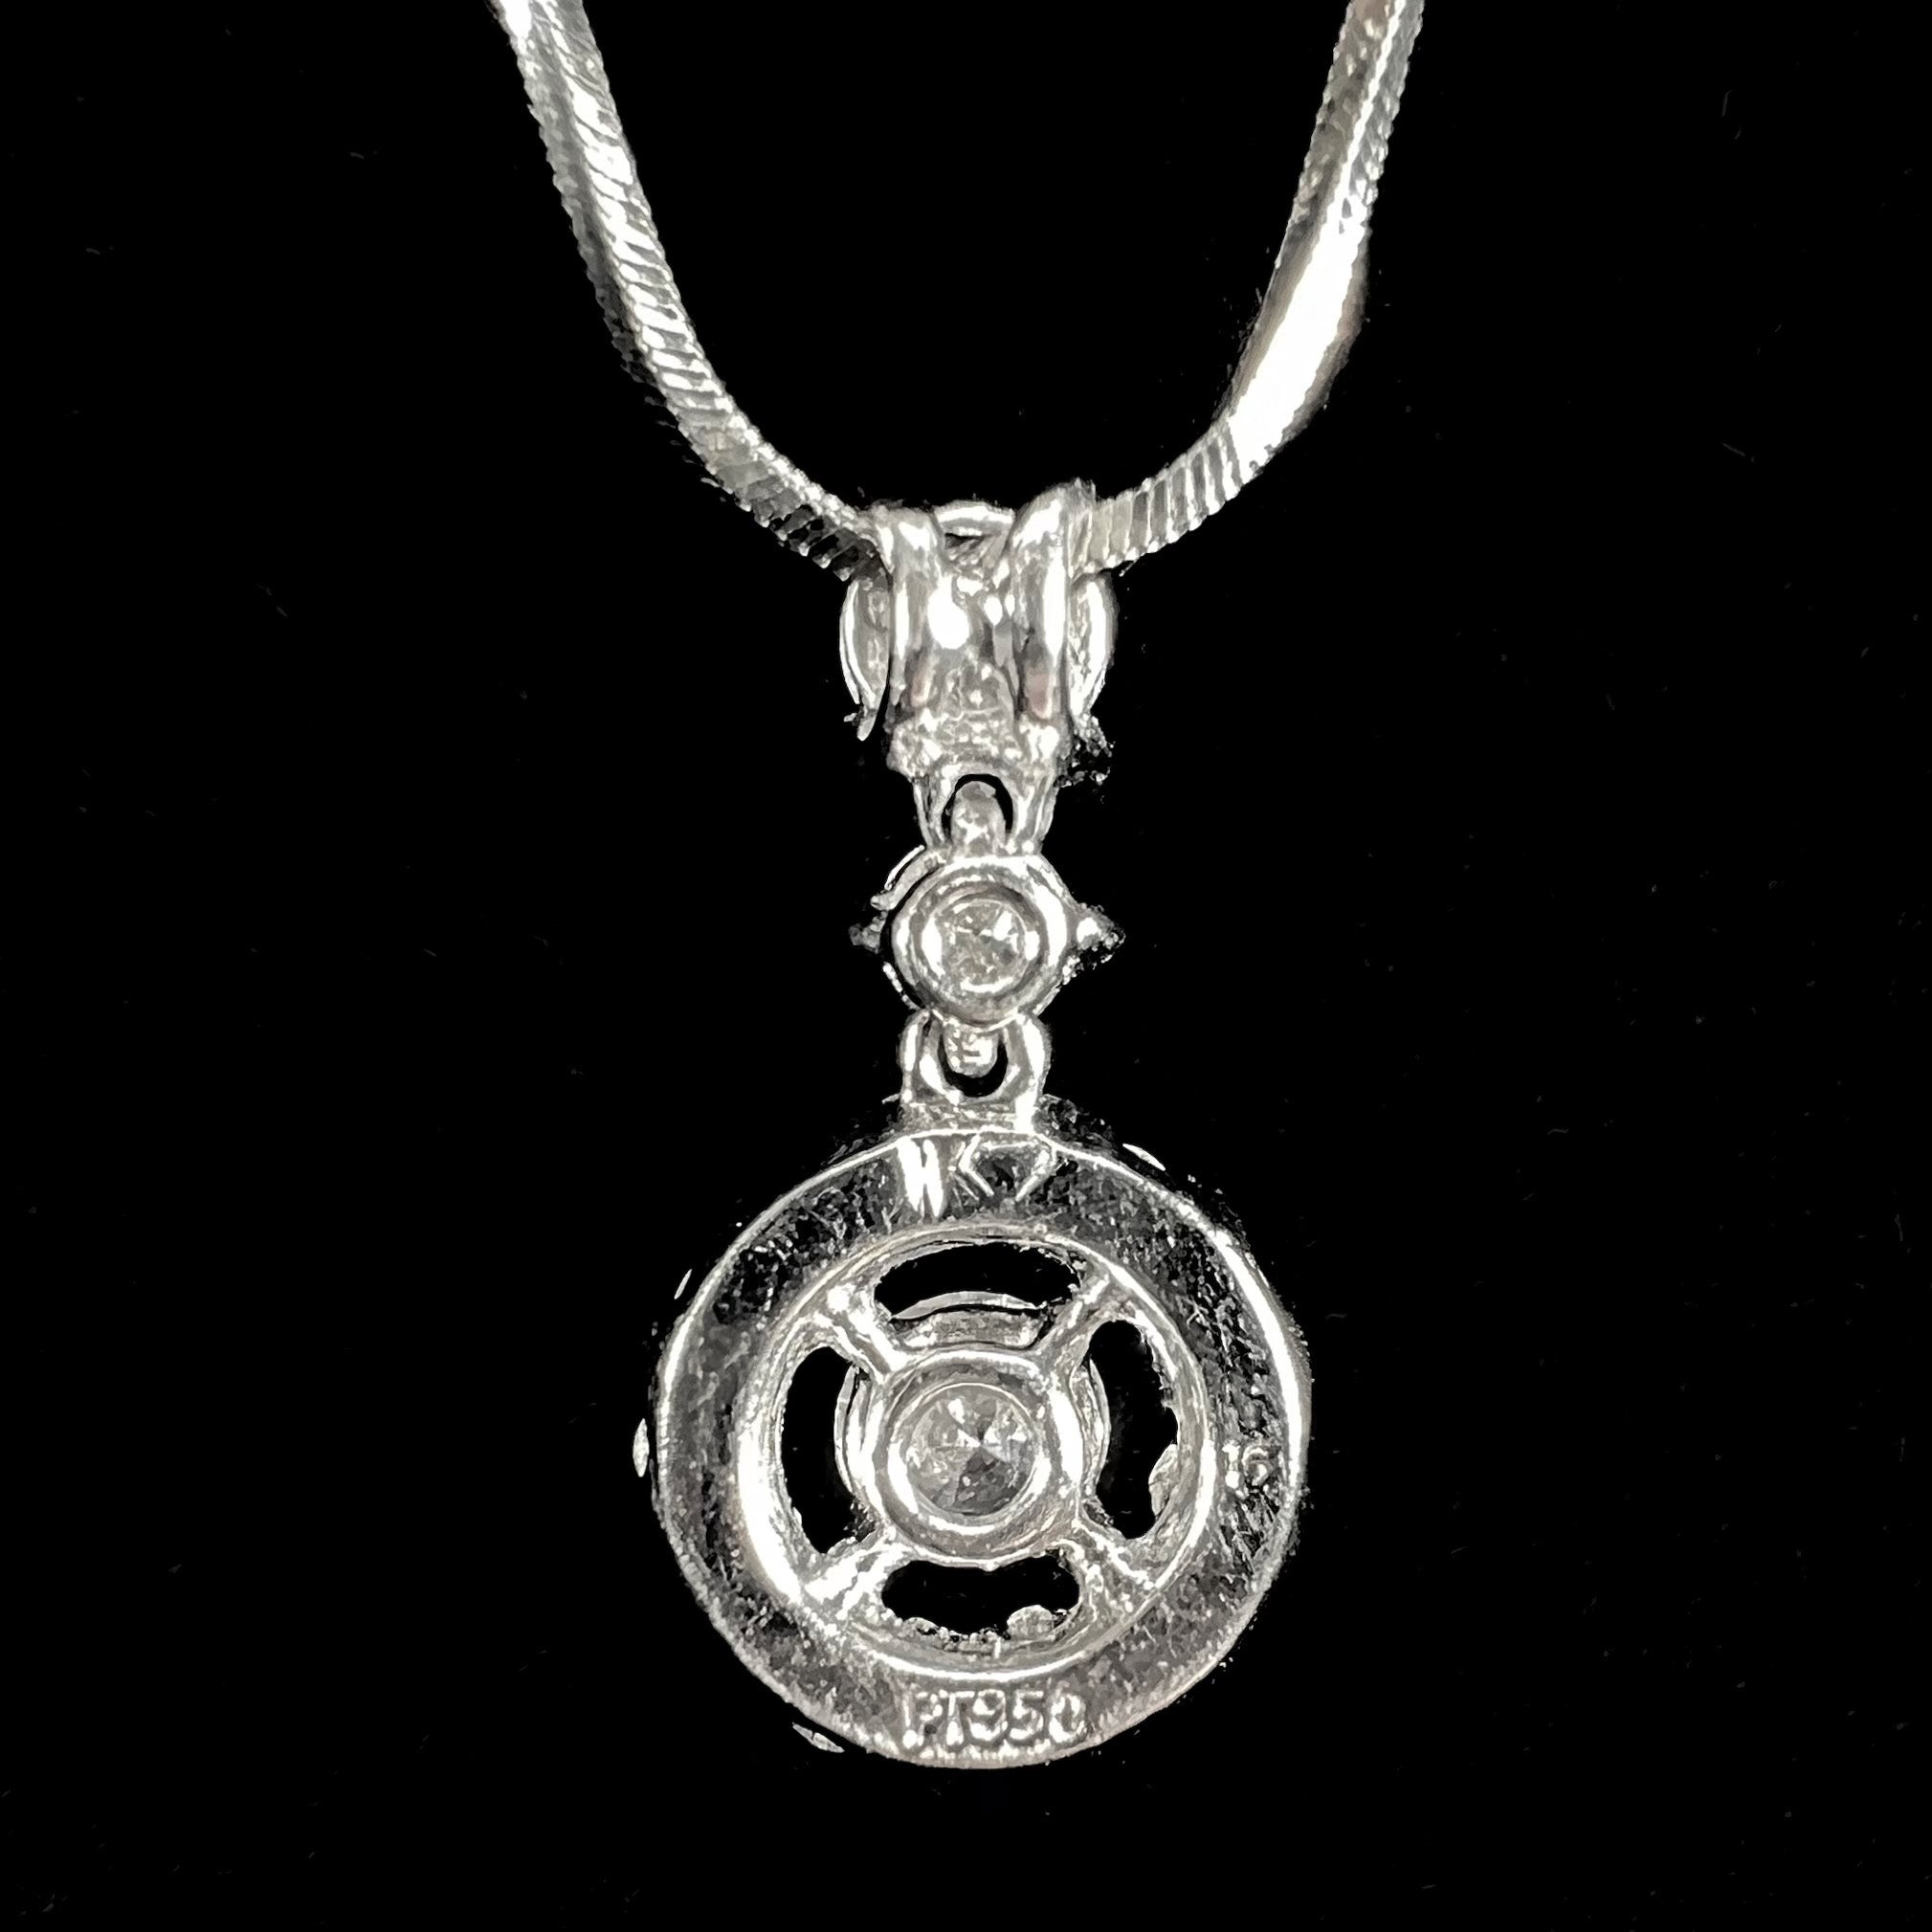 PPT - Buy necklace online in Saudi Arabia, UAE _ Jewelry online Dubai  PowerPoint Presentation - ID:10631461